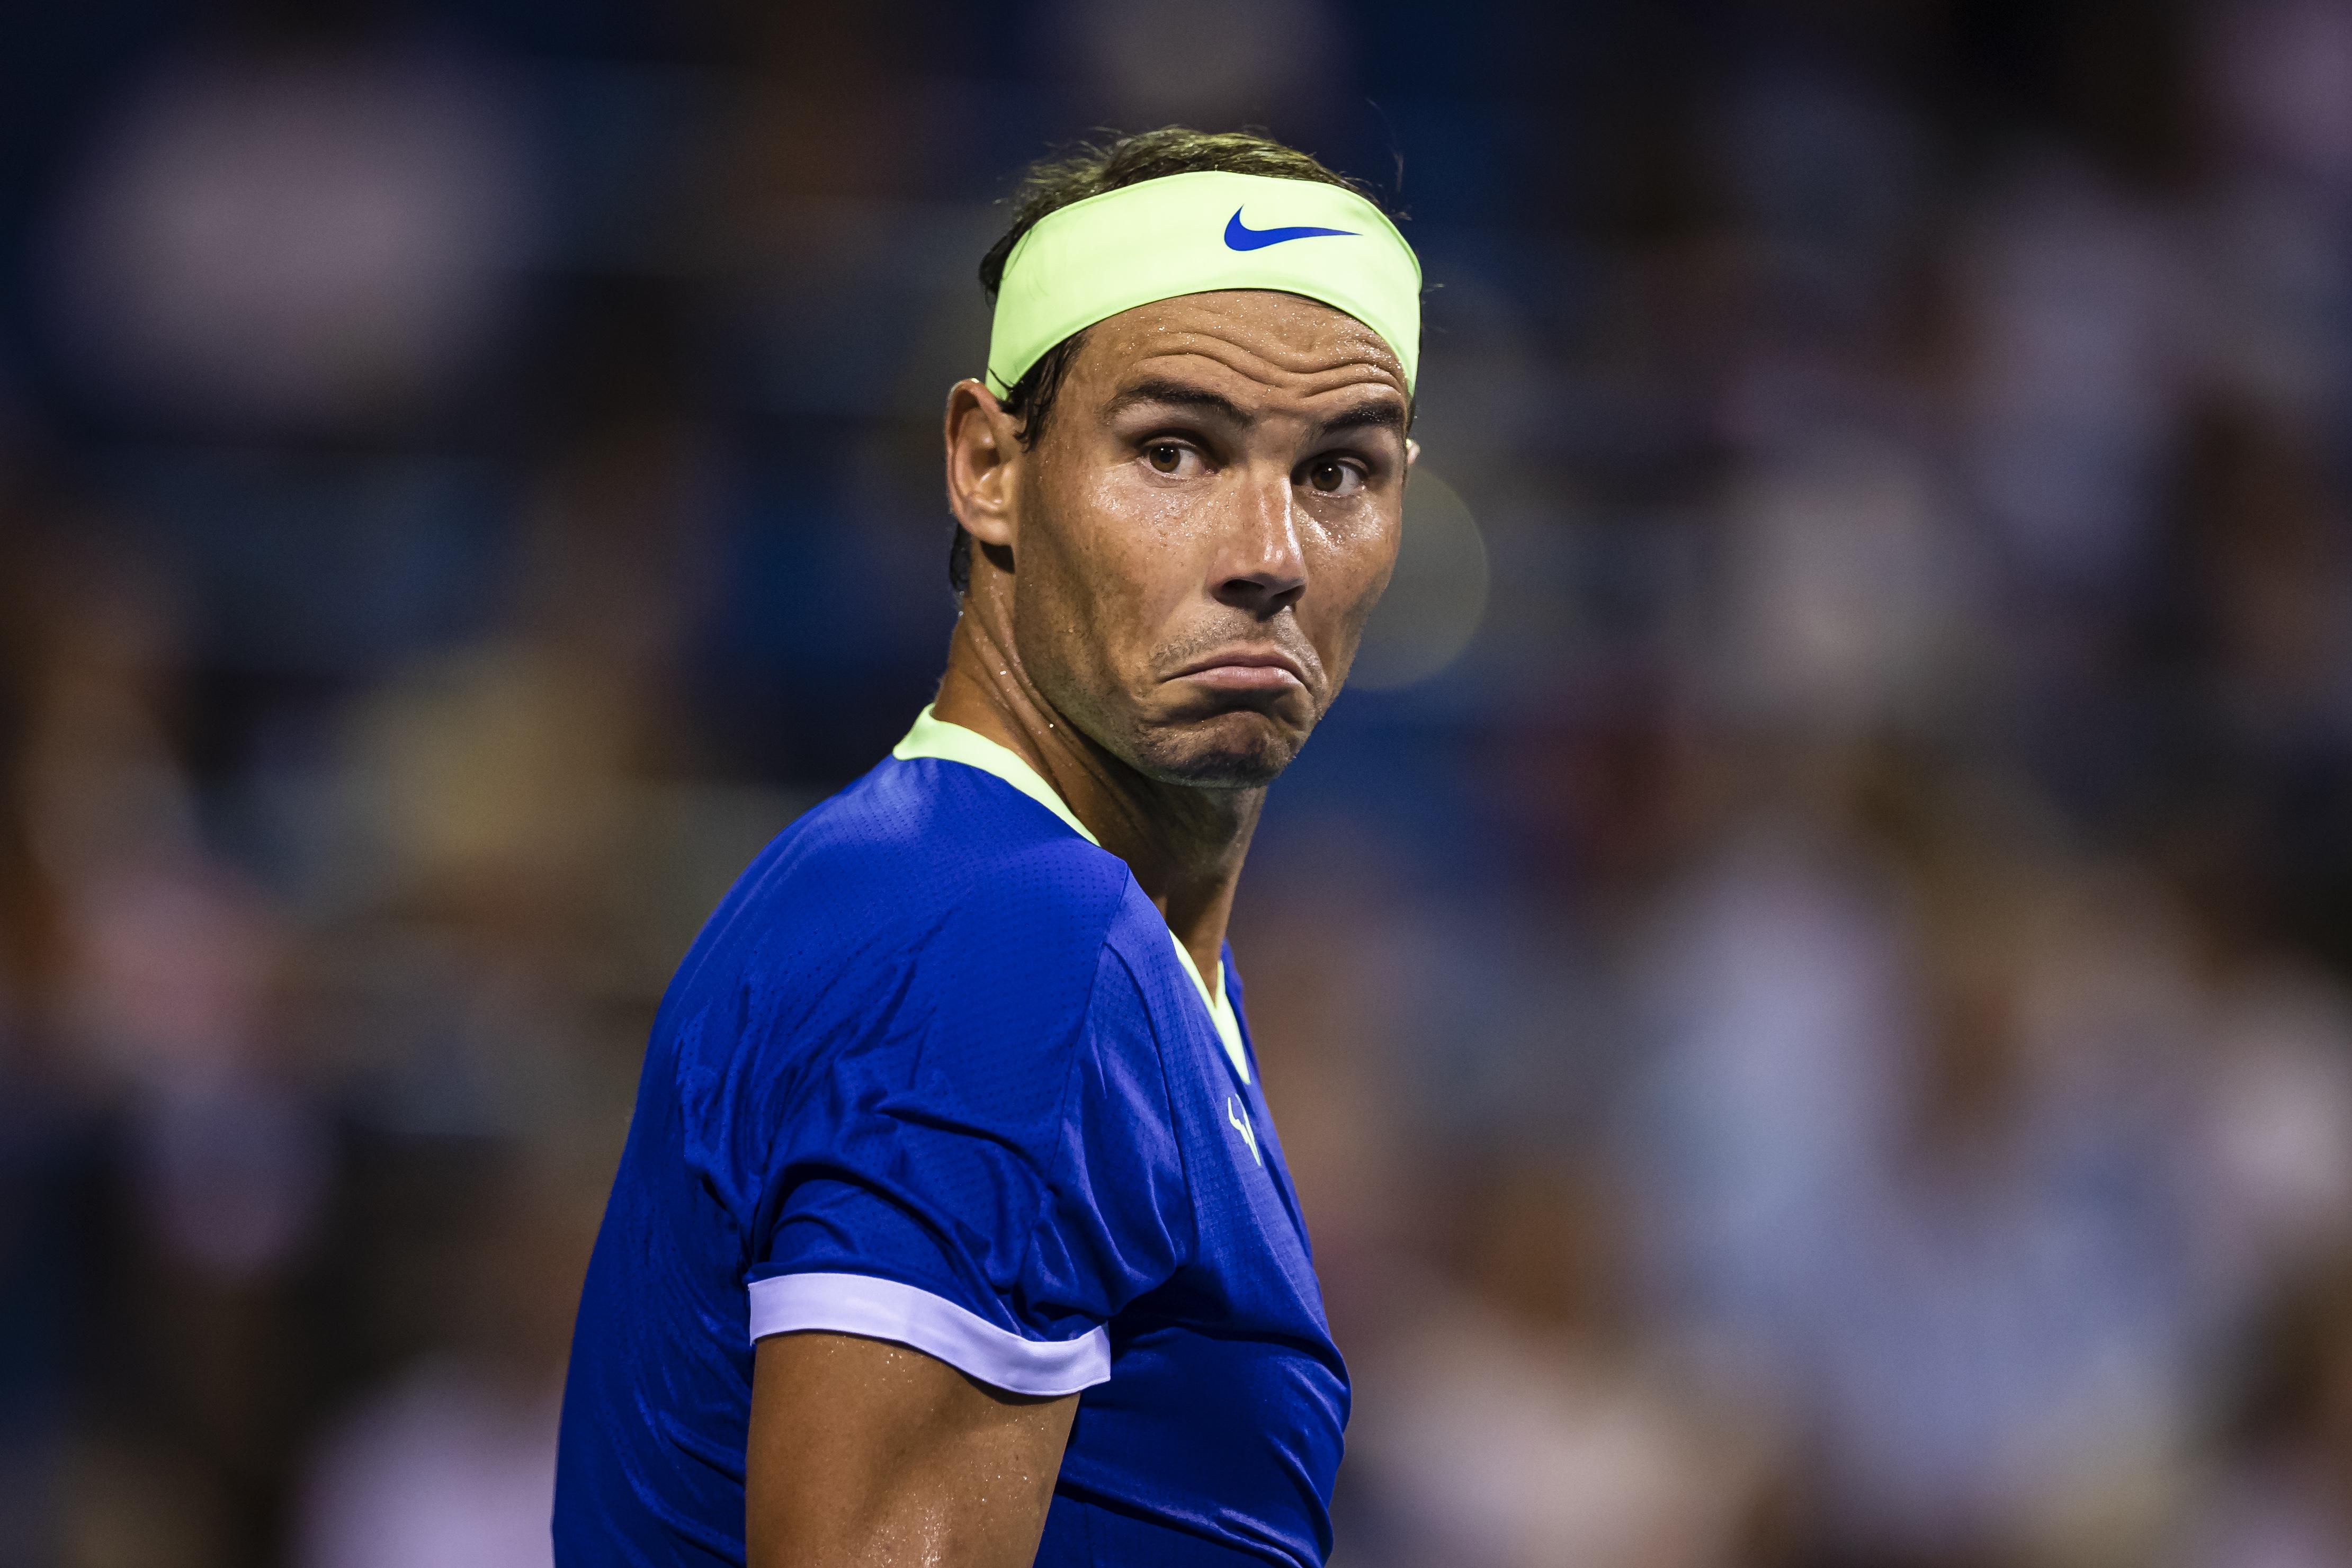 Kurioses Duell: Rafael Nadal spielte gegen einen 97-Jährigen